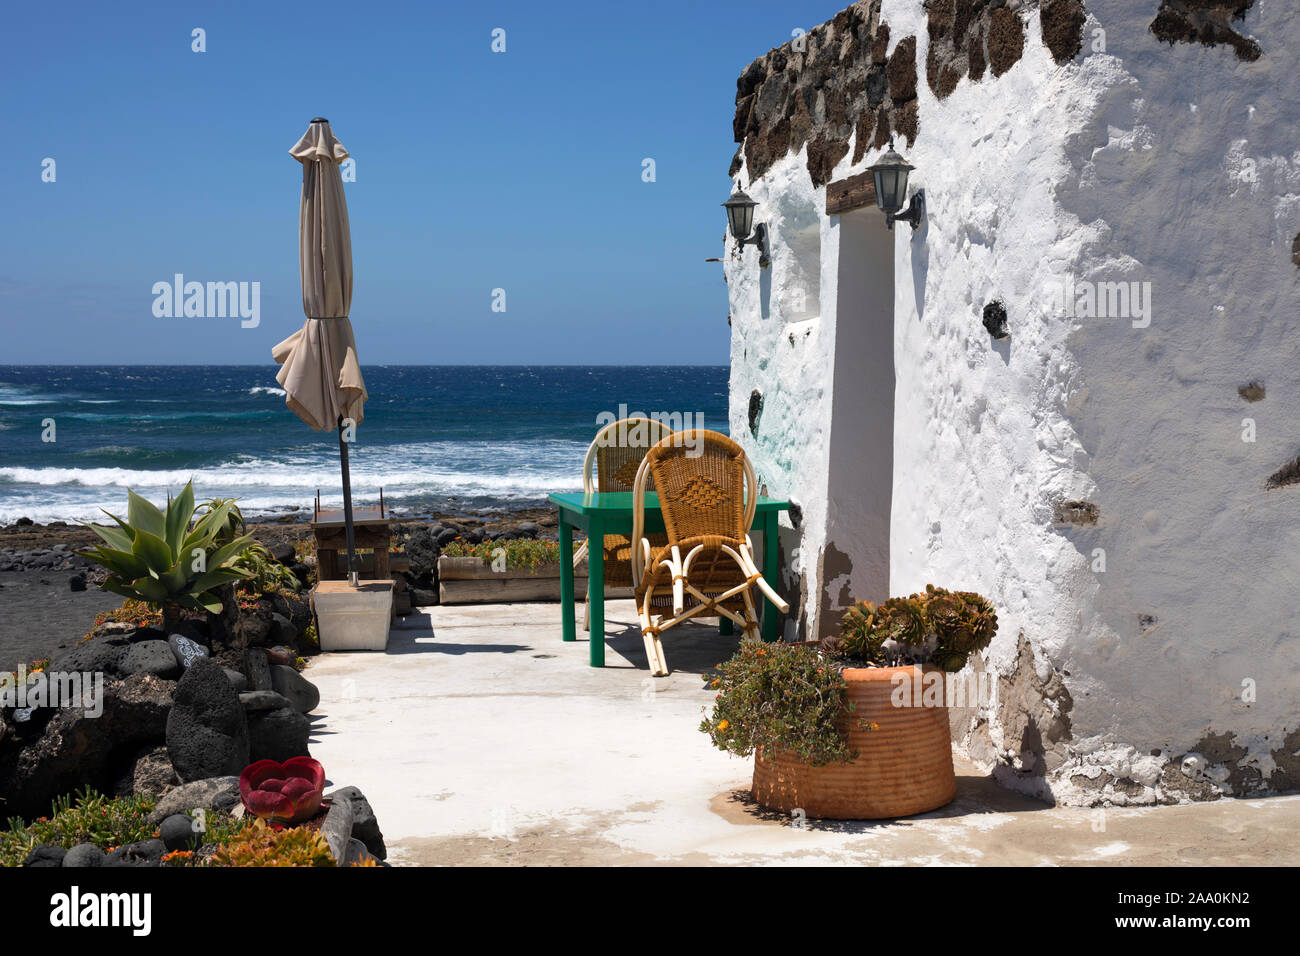 piccola finca imbiancata a calce a El Golfo, Lanzarote Foto Stock